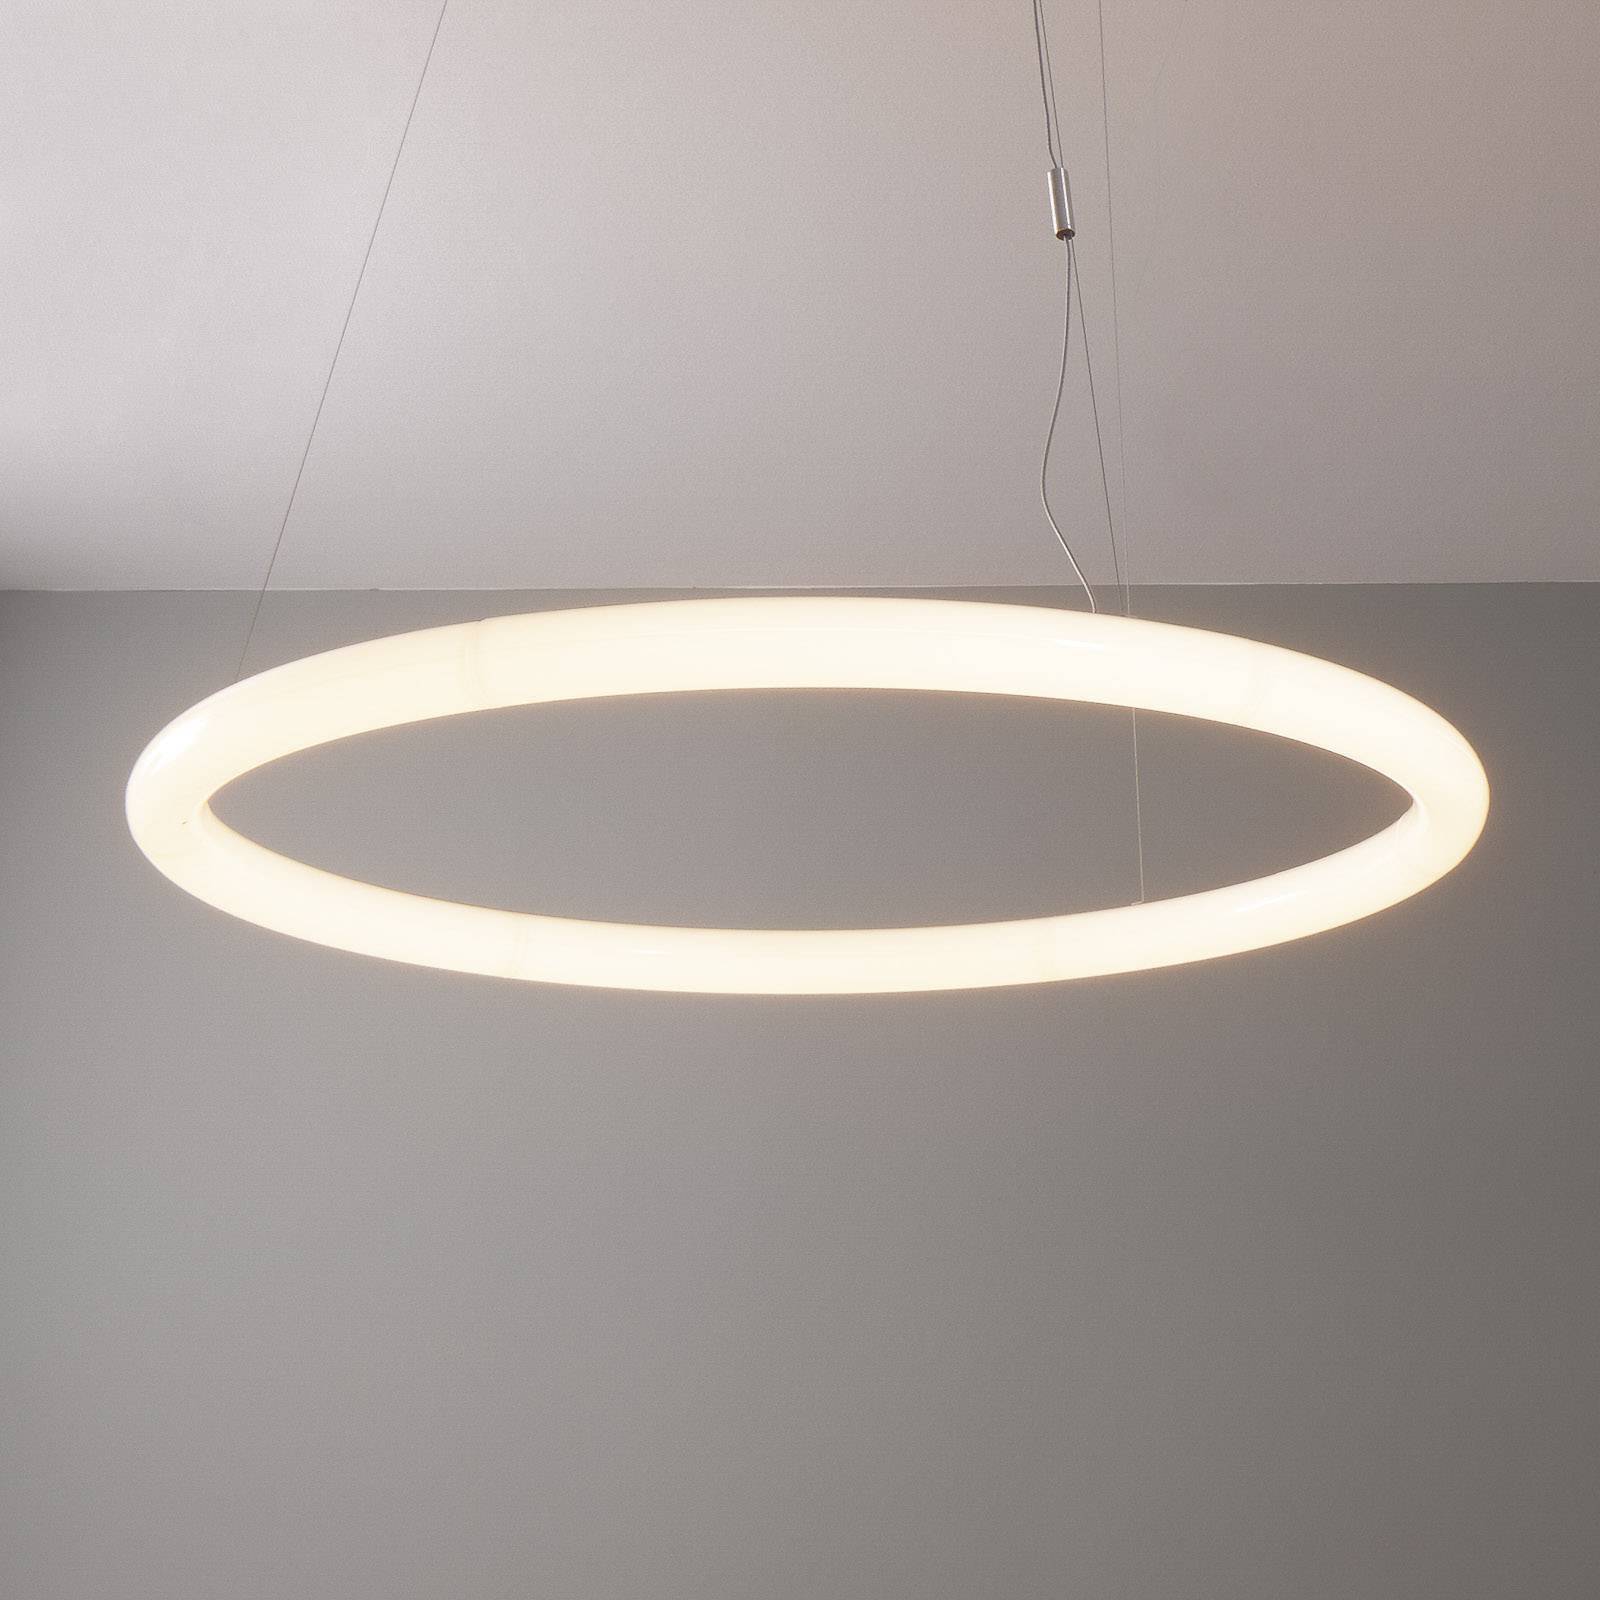 Artemide Artemide Abeceda světla kruhový via app 90 cm